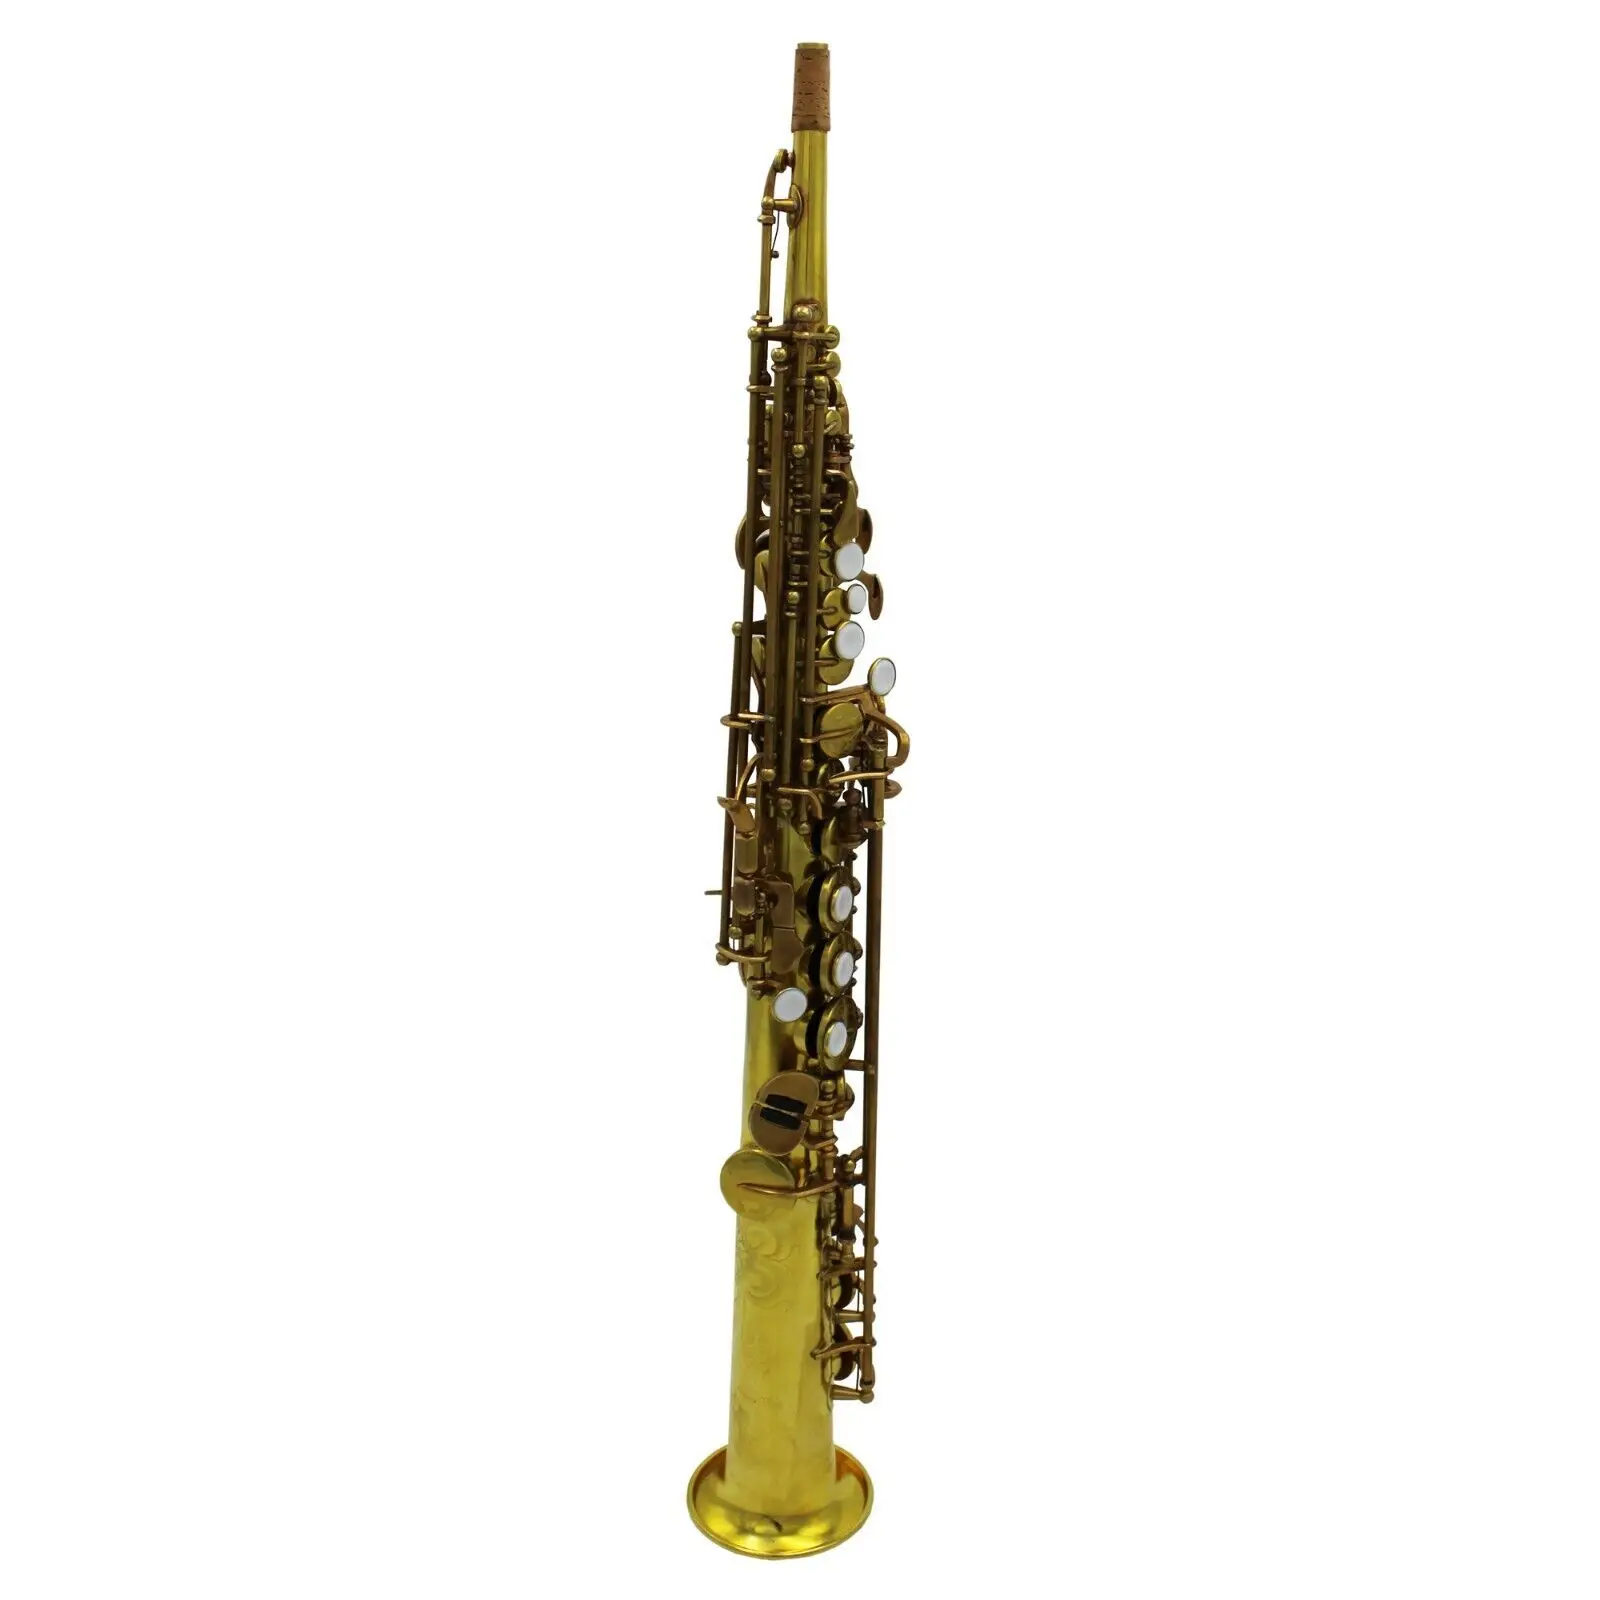 

Eastern Music unlacquer yellow brass body straight soprano saxophone